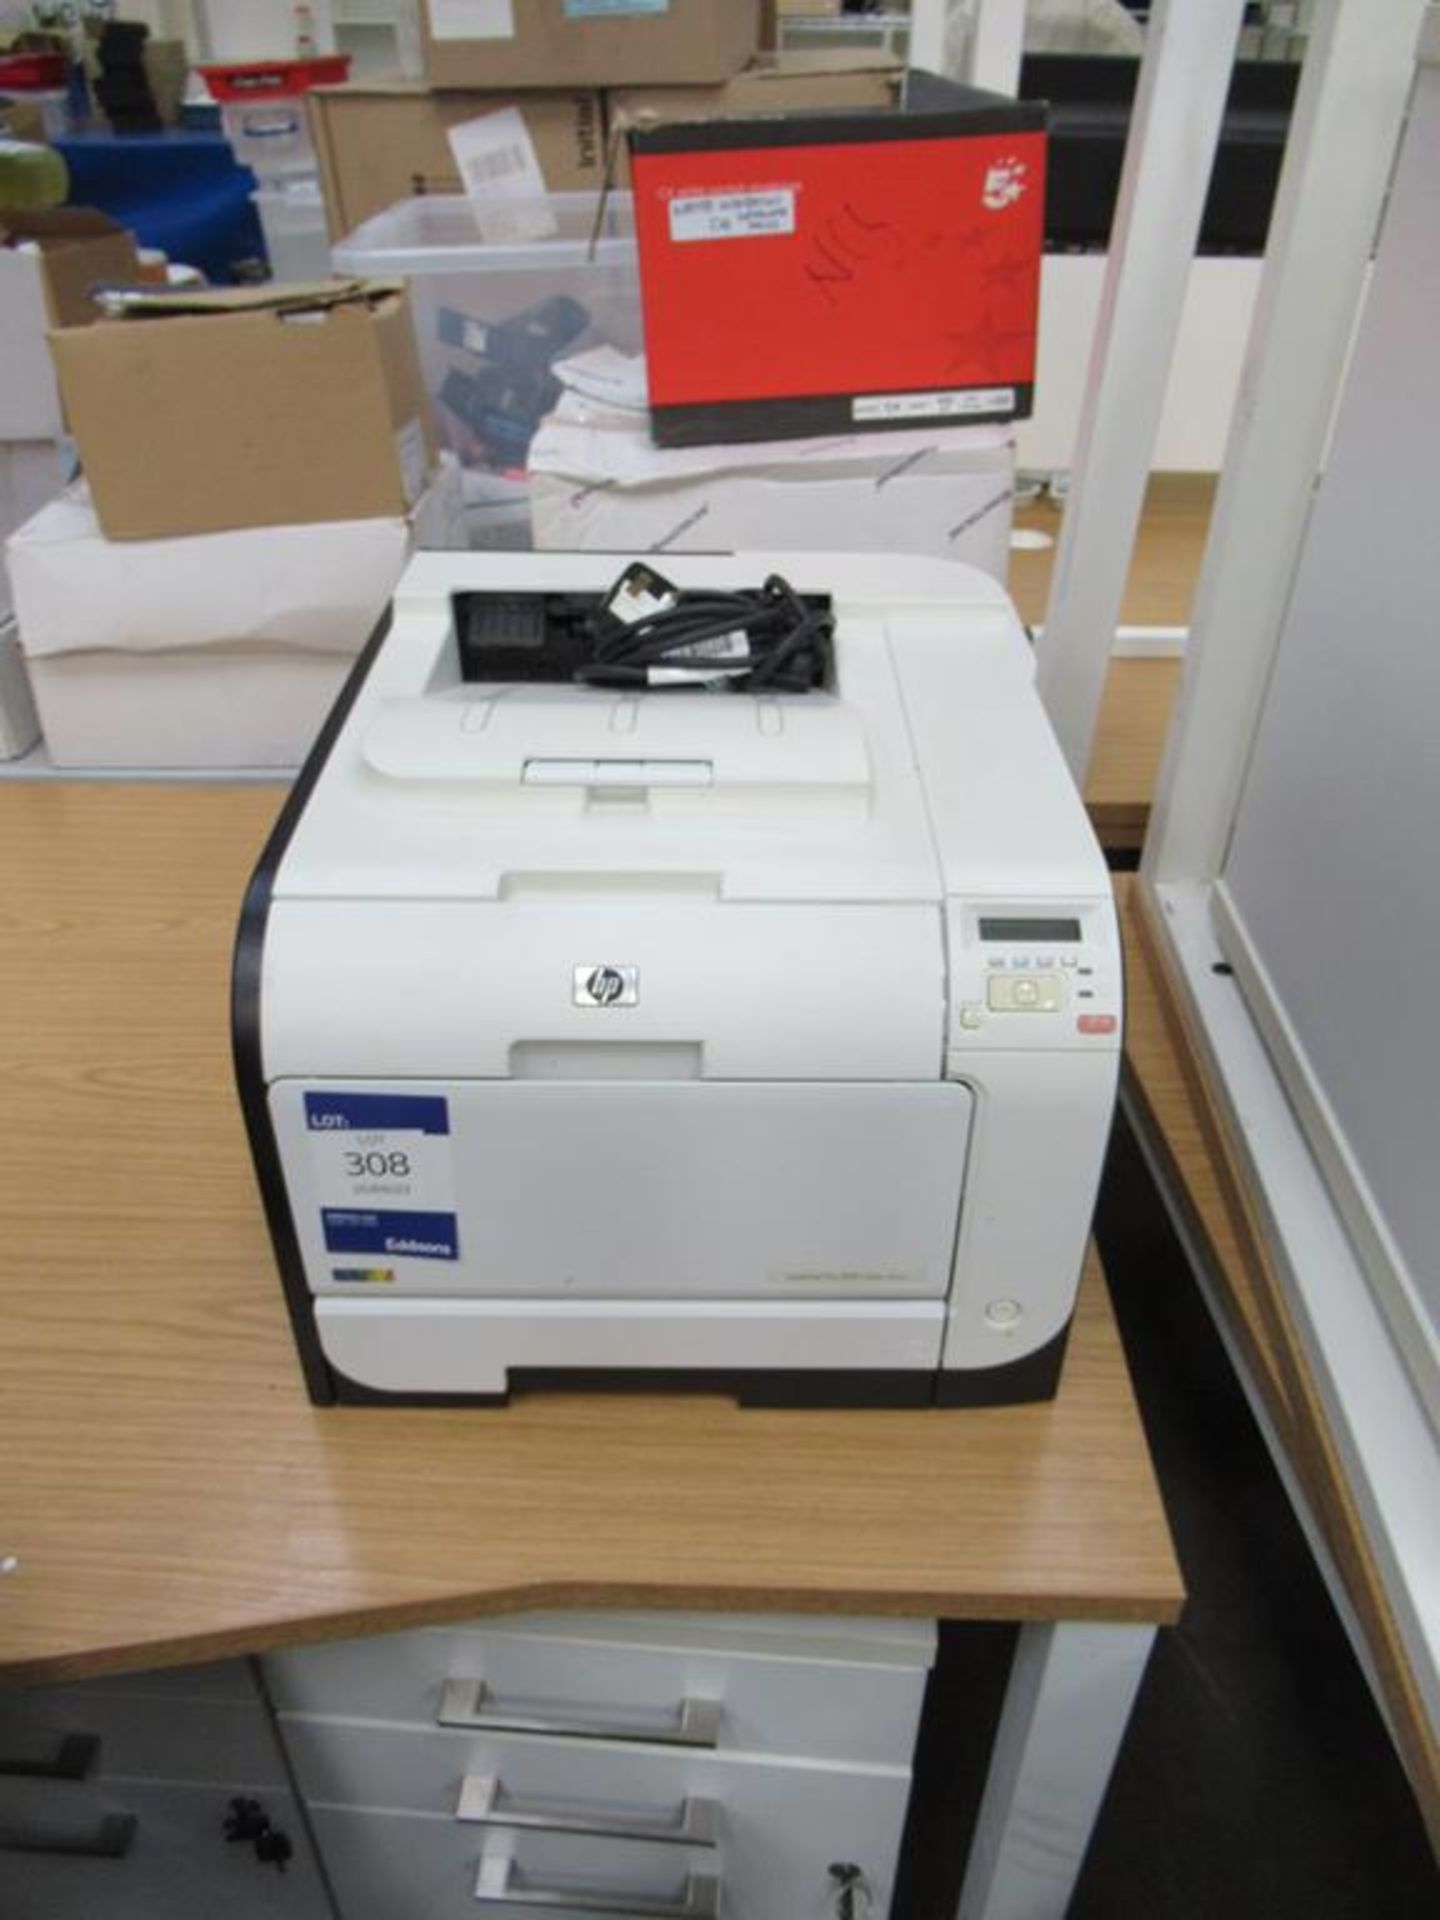 HP Laserjet Pro 400 colour printer